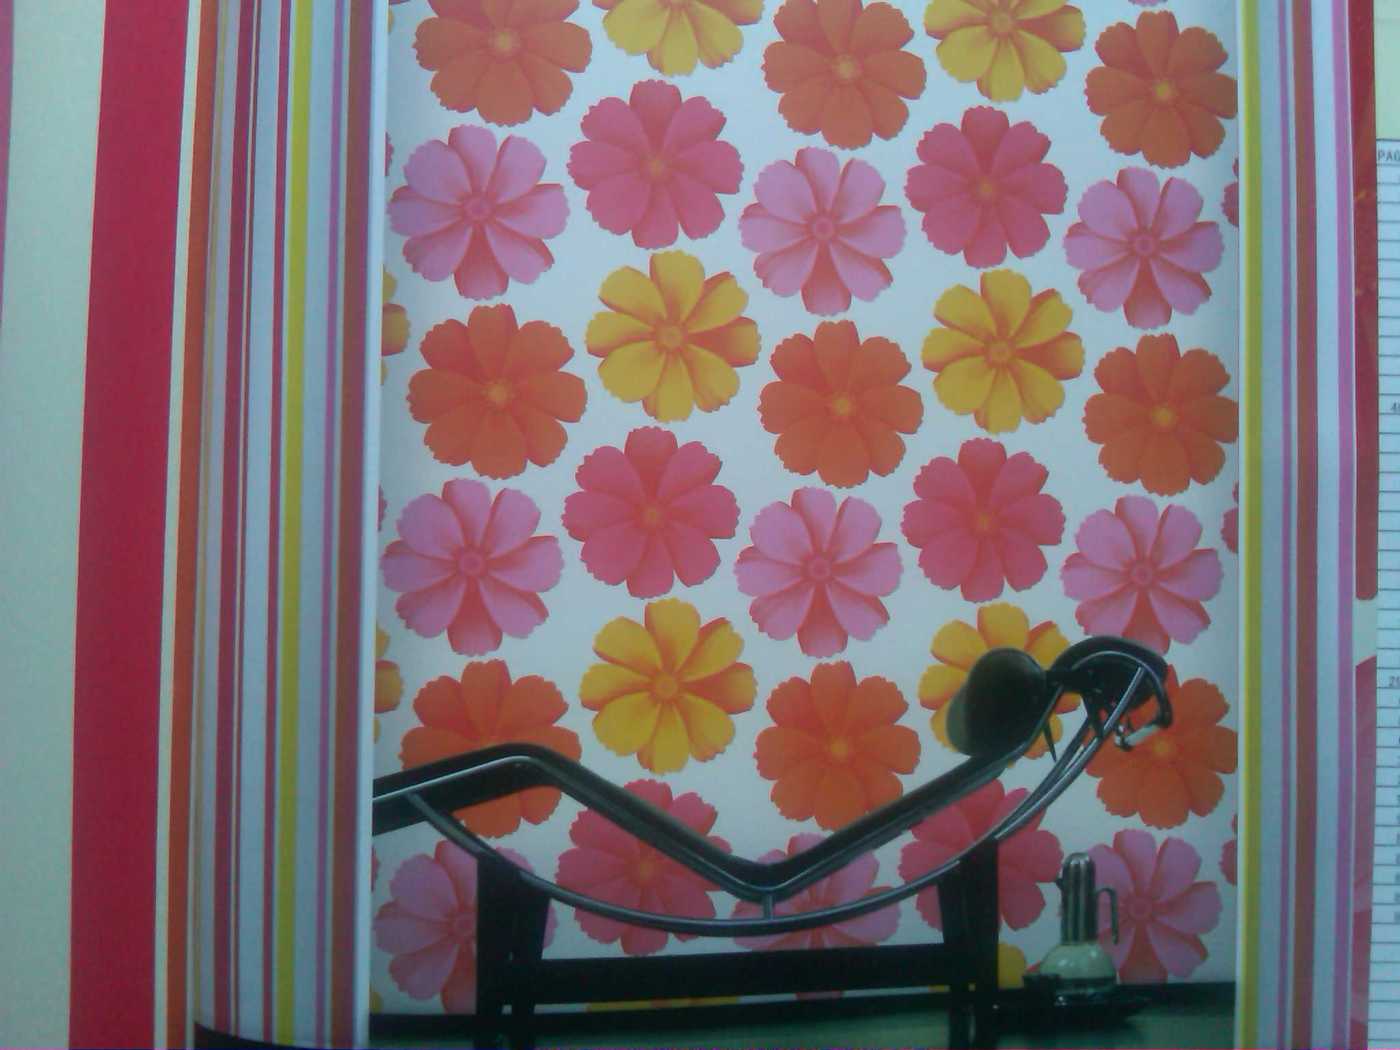 wallpaper dinding murah,pink,pattern,textile,room,visual arts